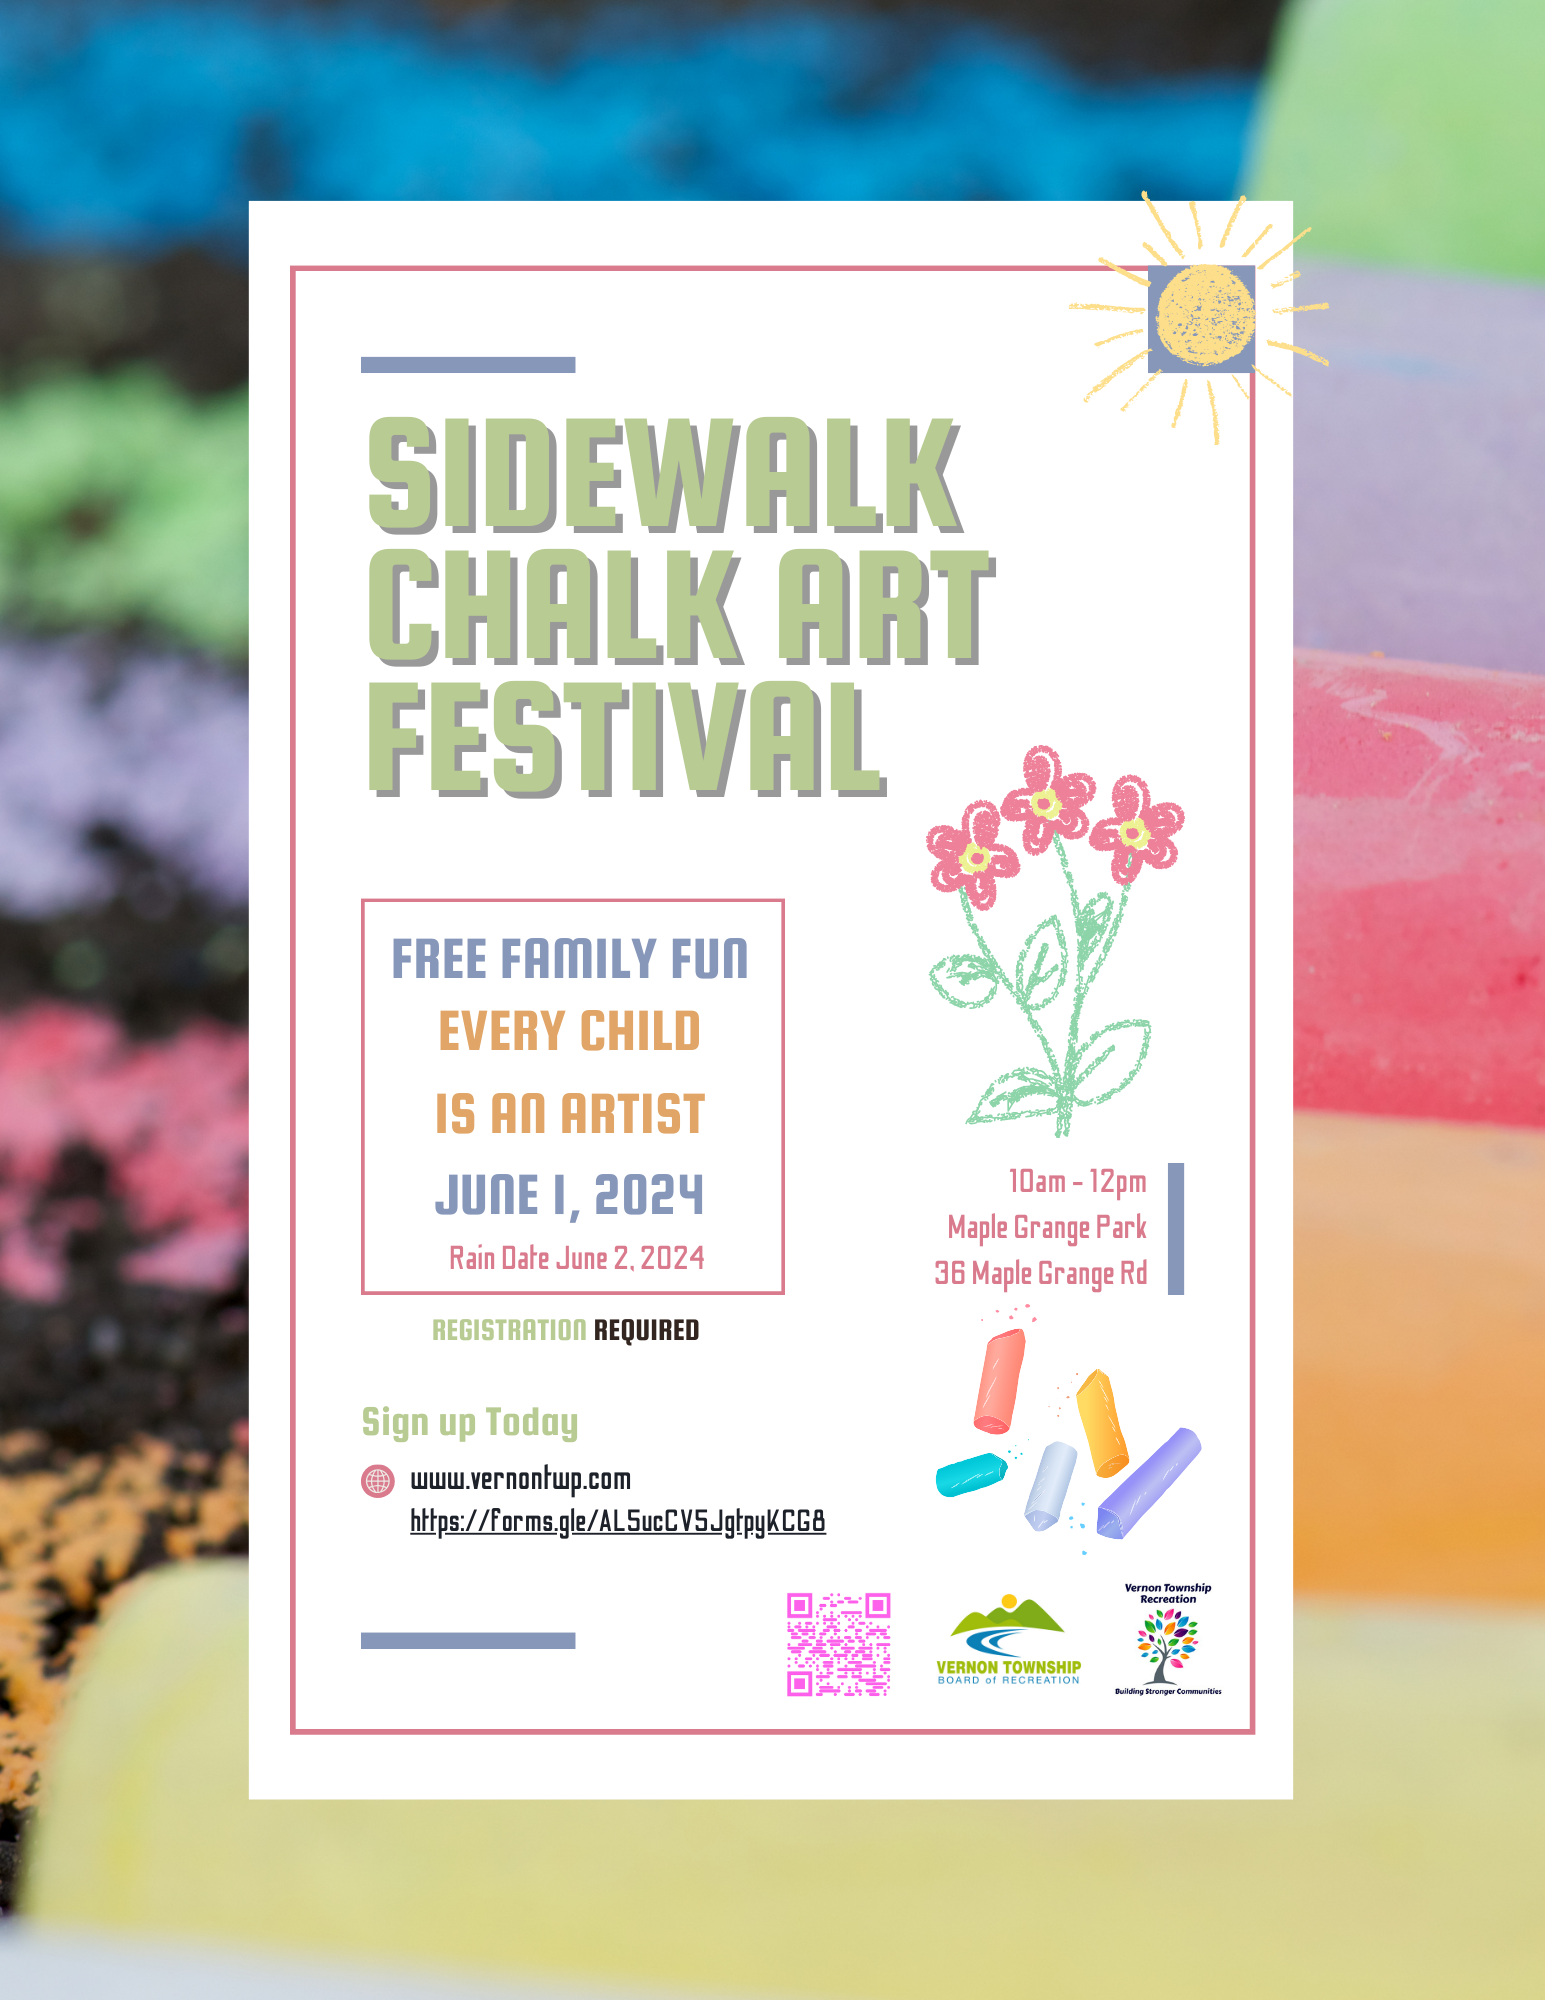 Sidewalk Chalk art festival